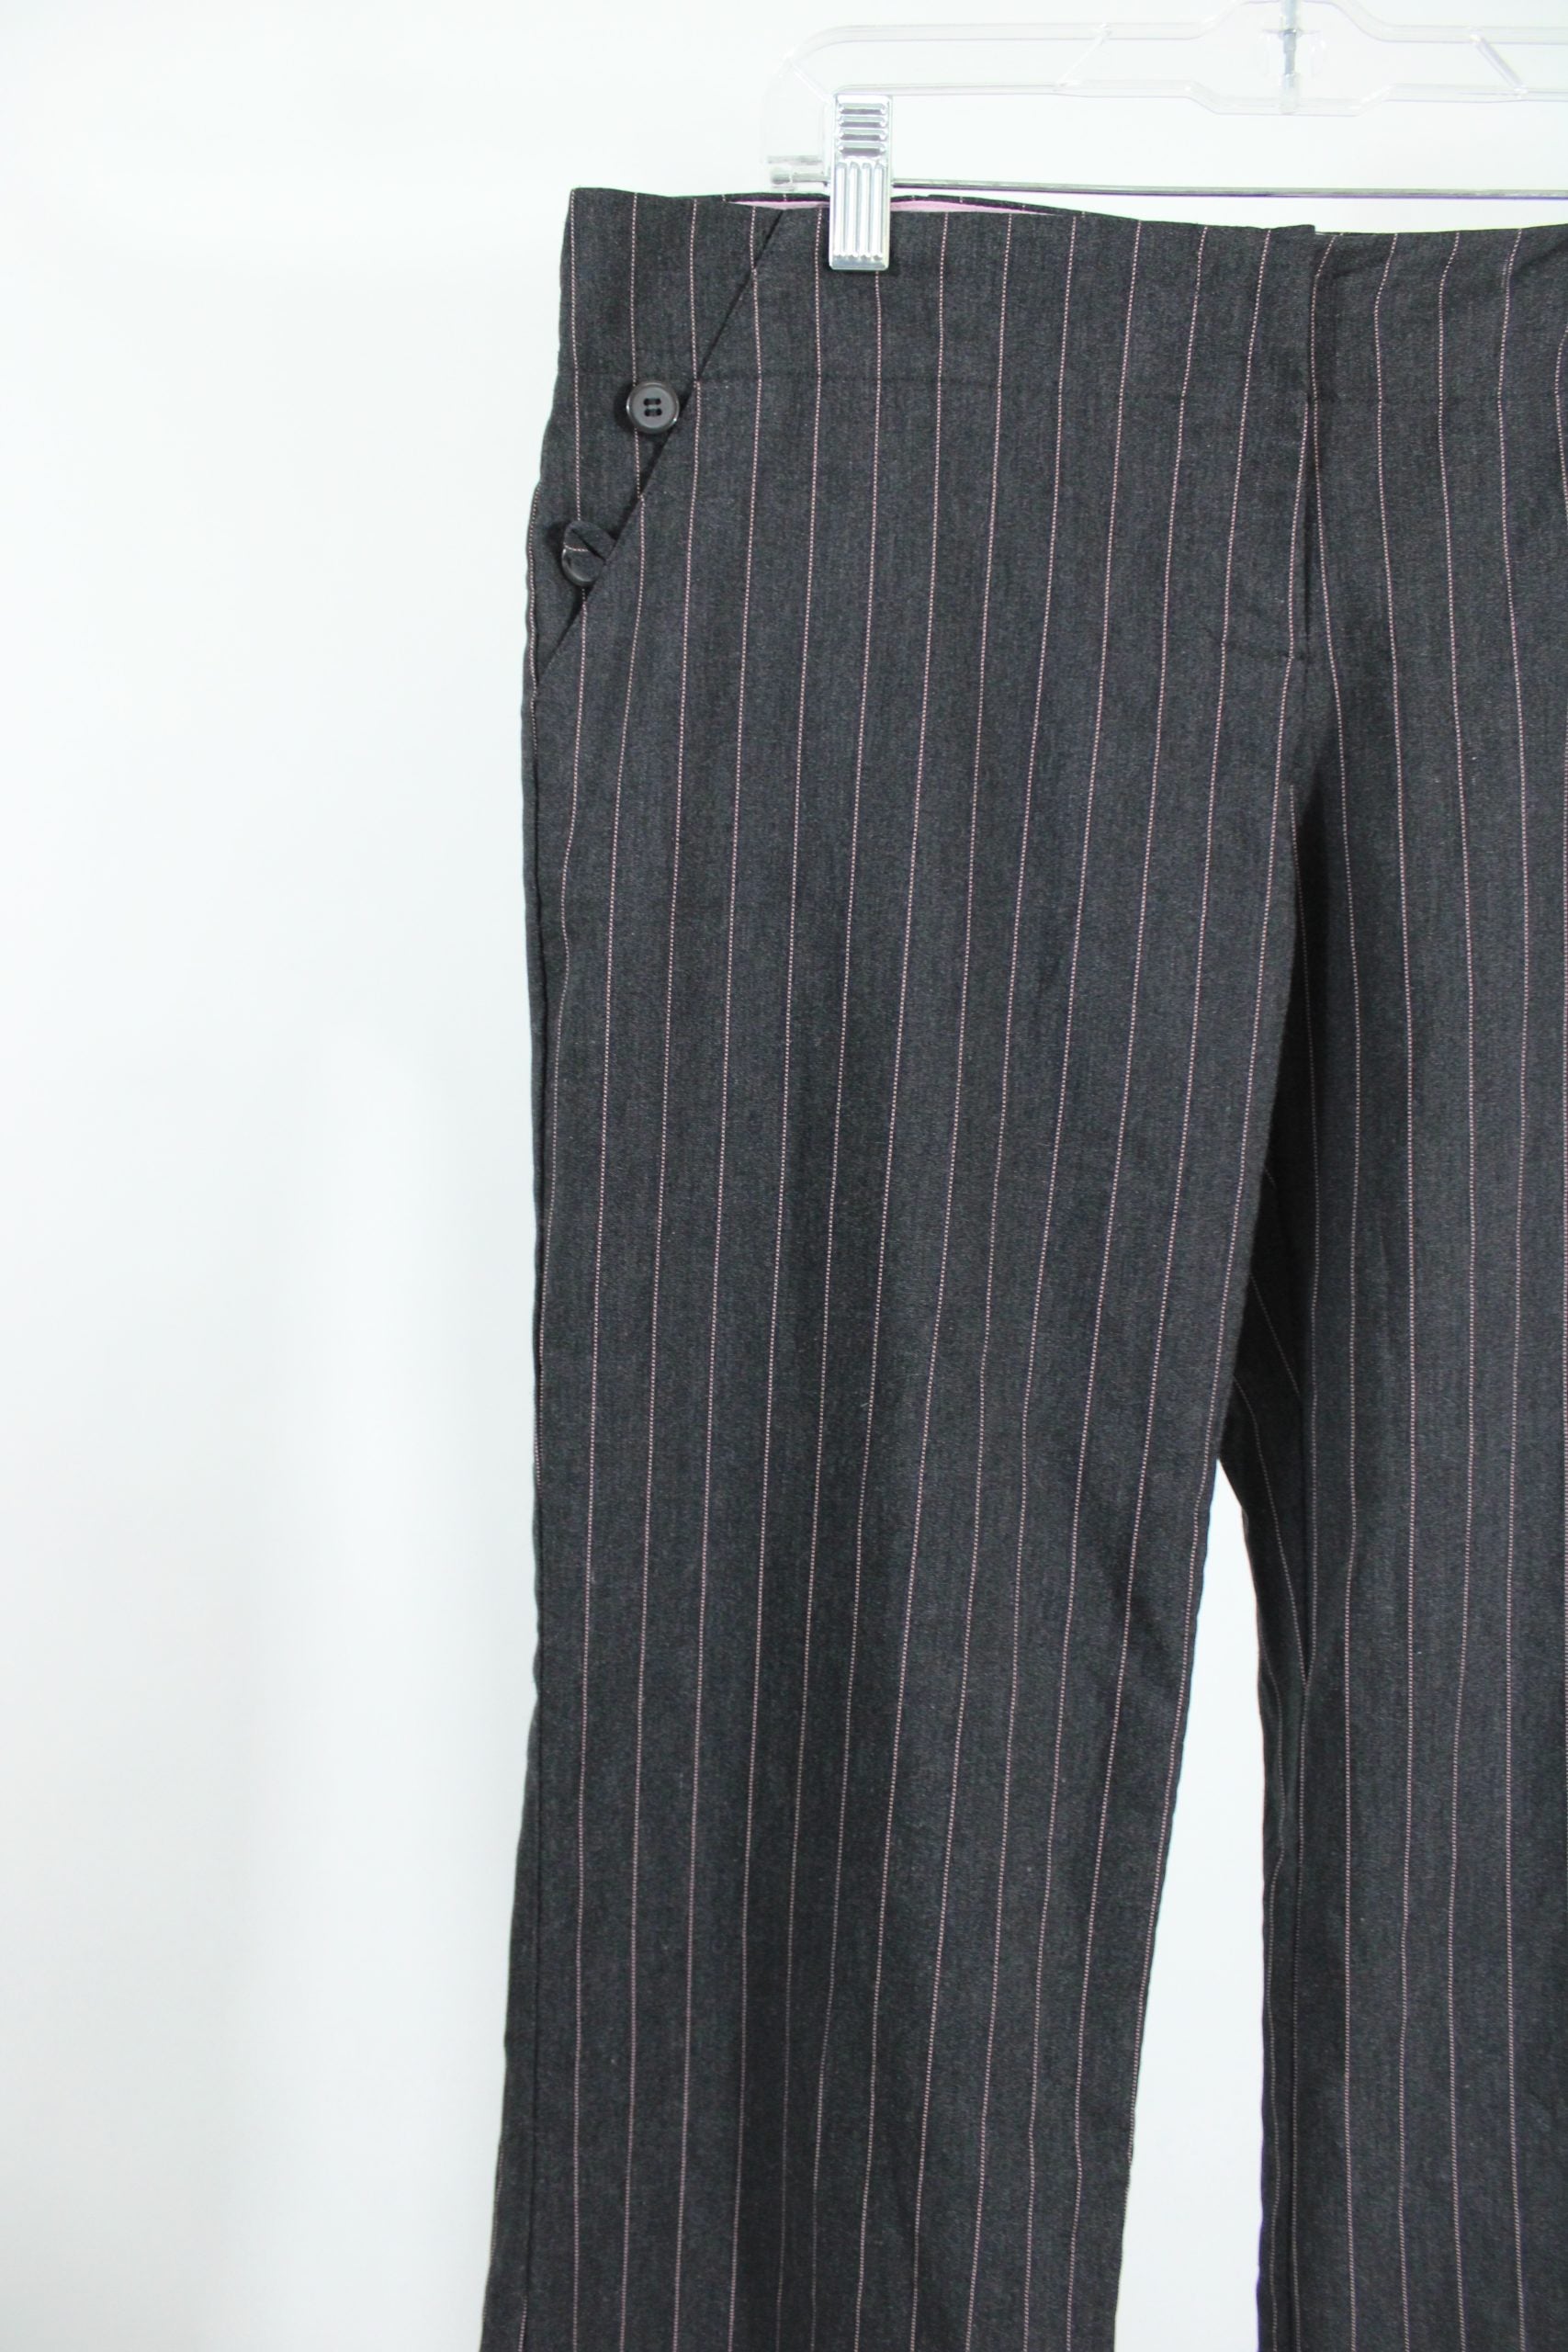 Exact Change Charcoal Grey Pink Pinstripe Dress Pants | Size 5